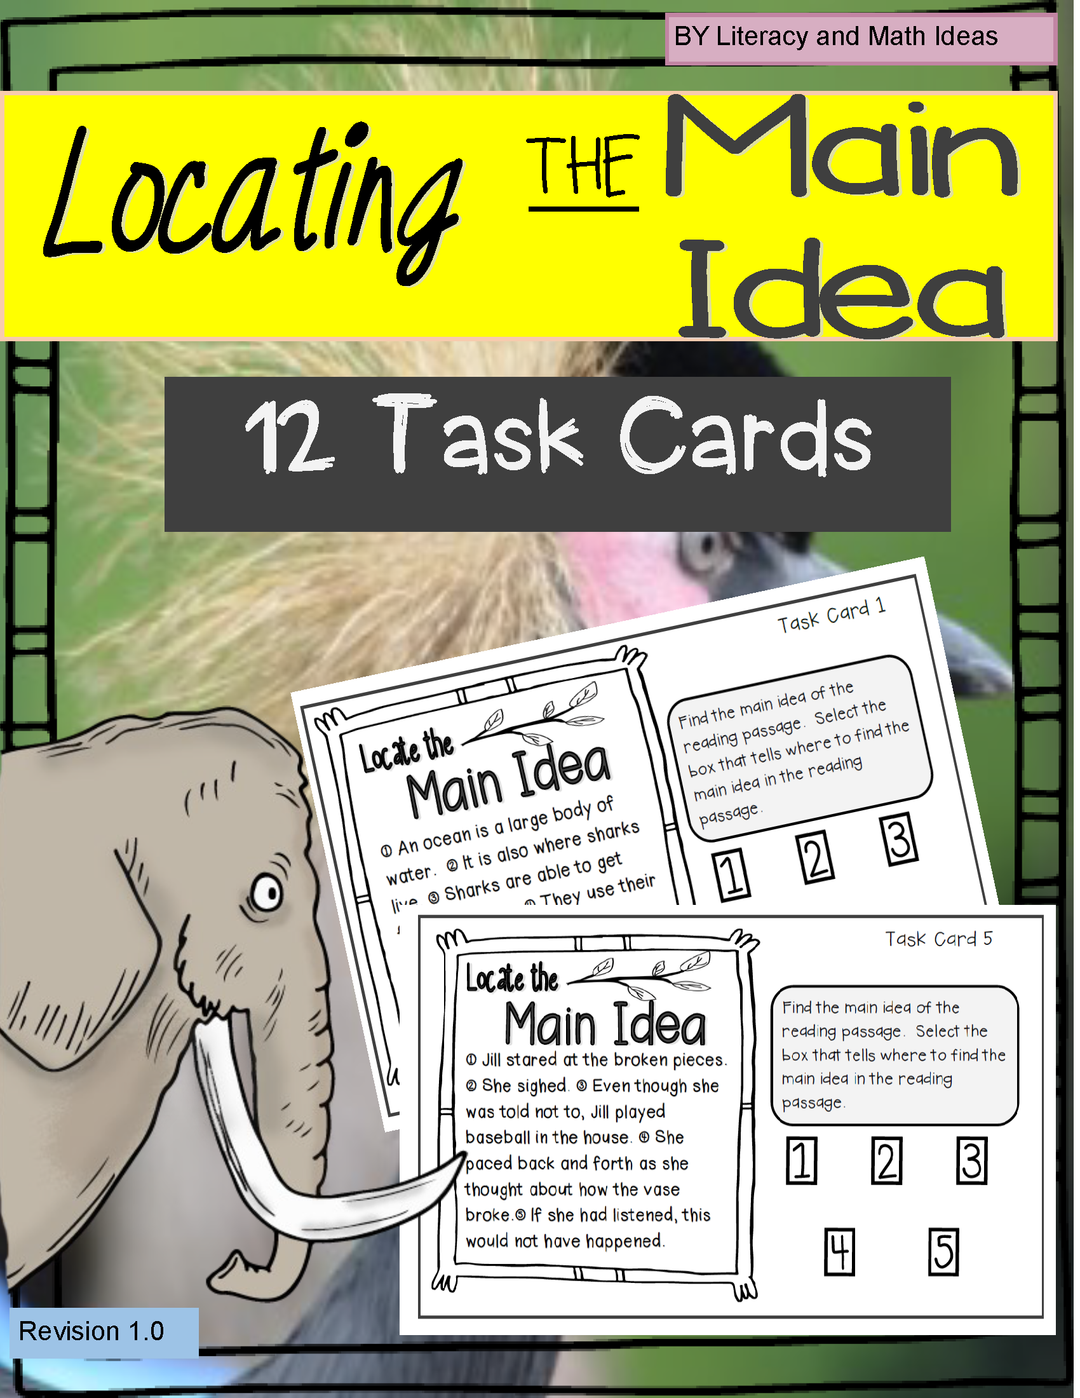 Locating the Main Idea Task Cards